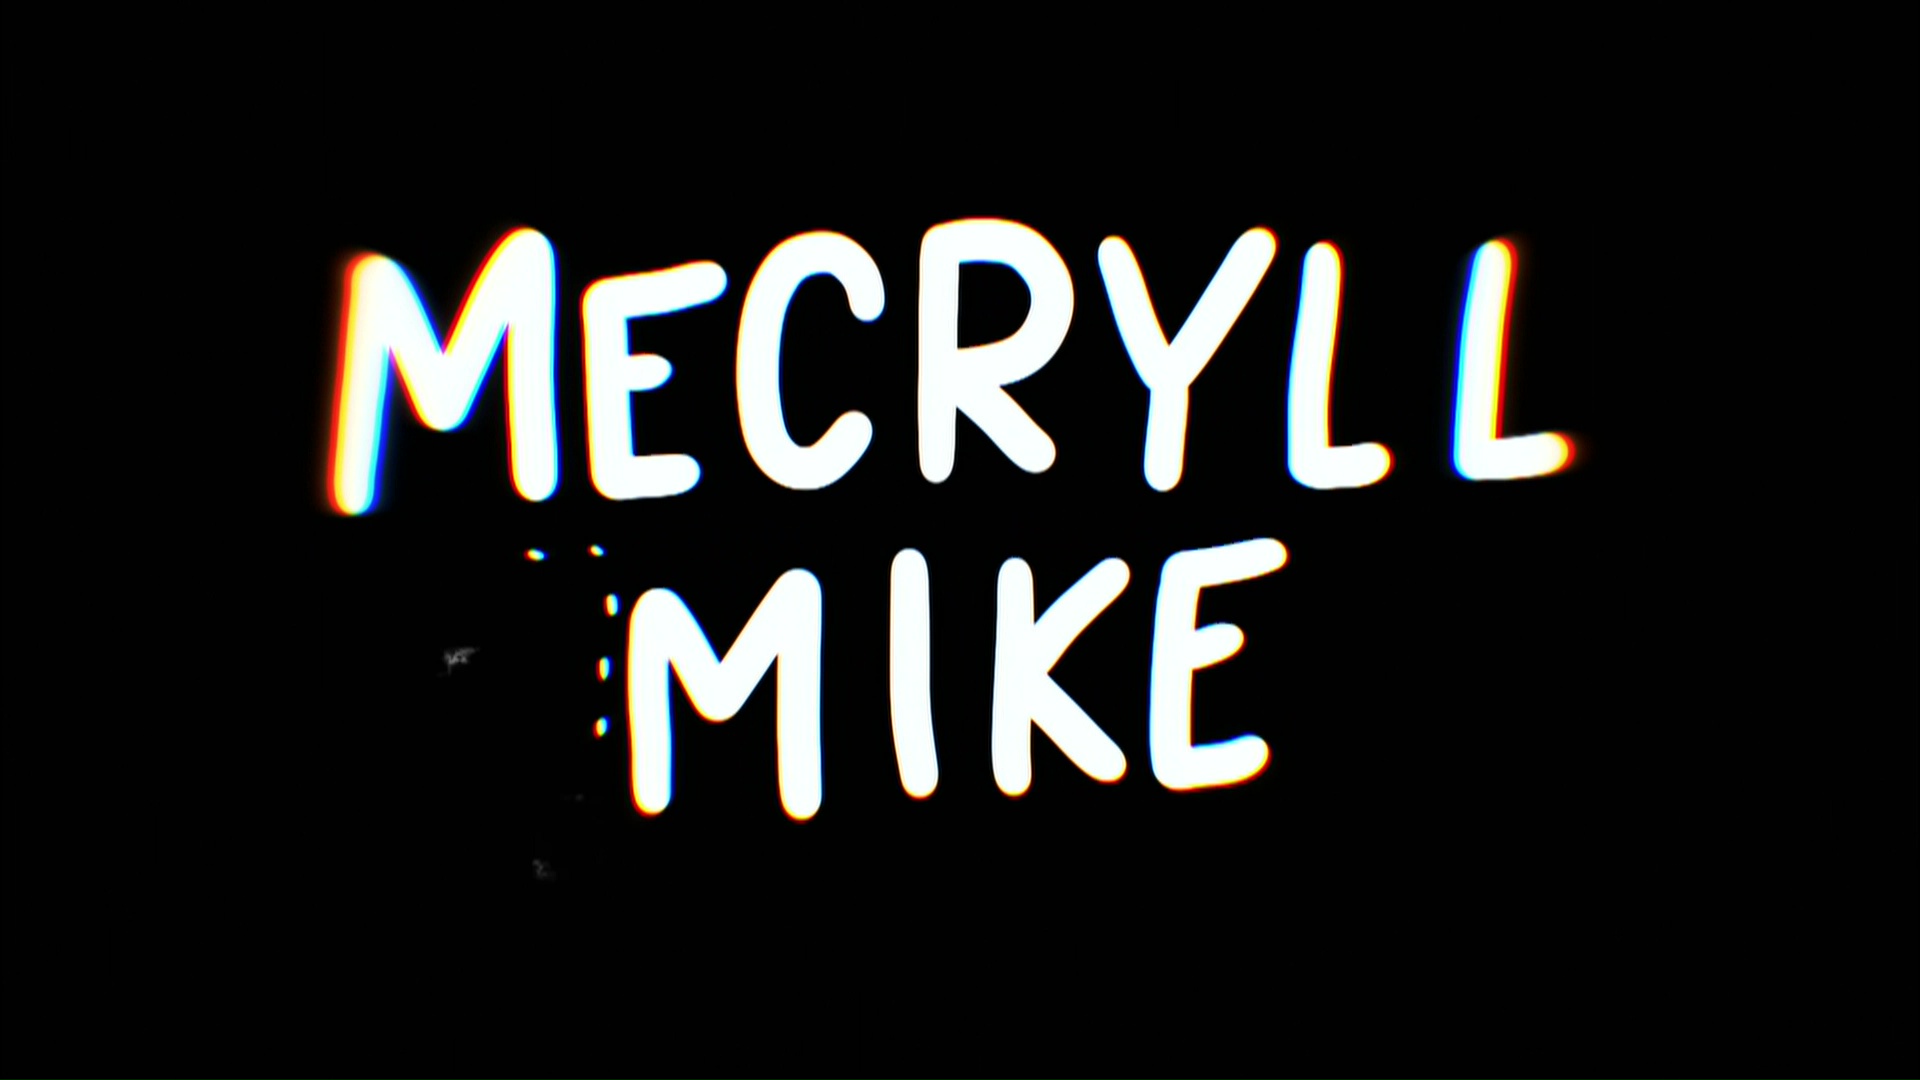 Mecryll Mike